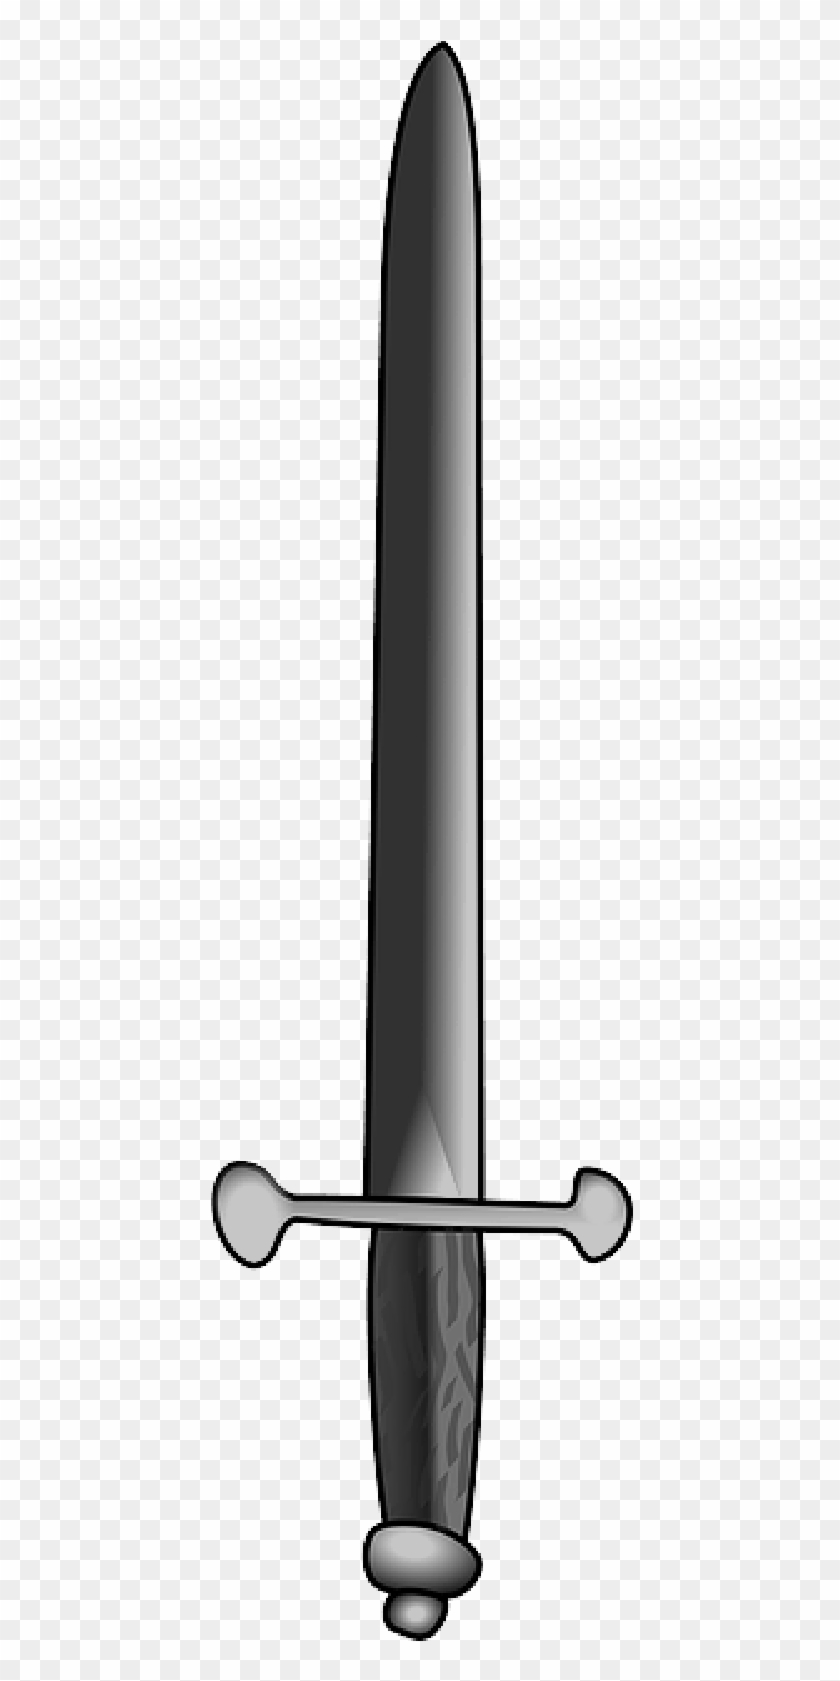 Muzzleloader - Simple Sword Drawing #1125382